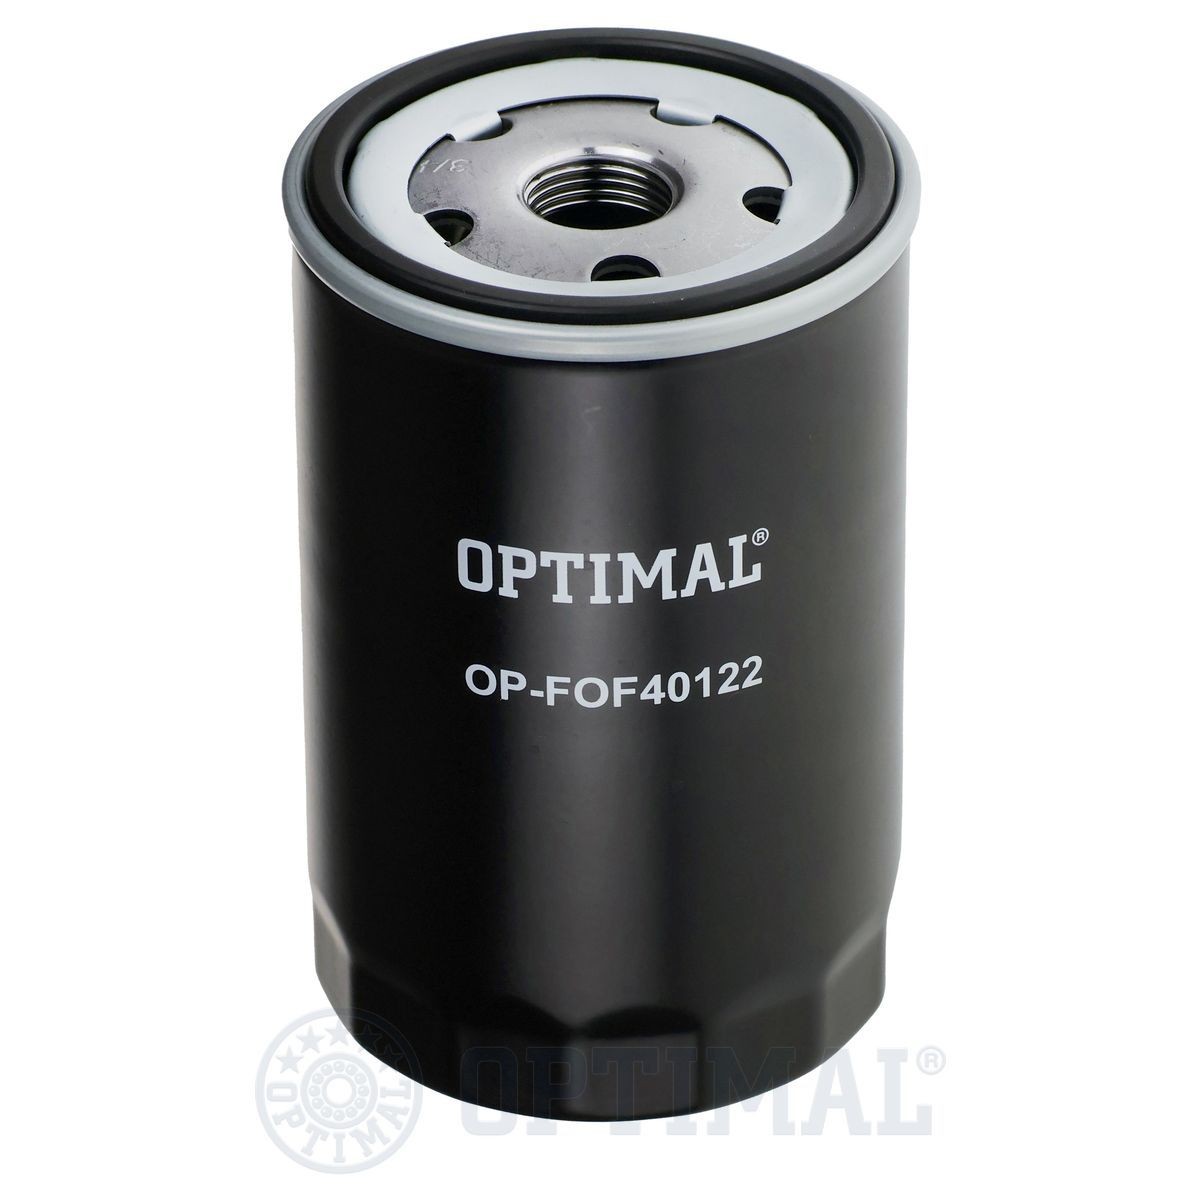 OPTIMAL OP-FOF40122 Oil filter 5012 651